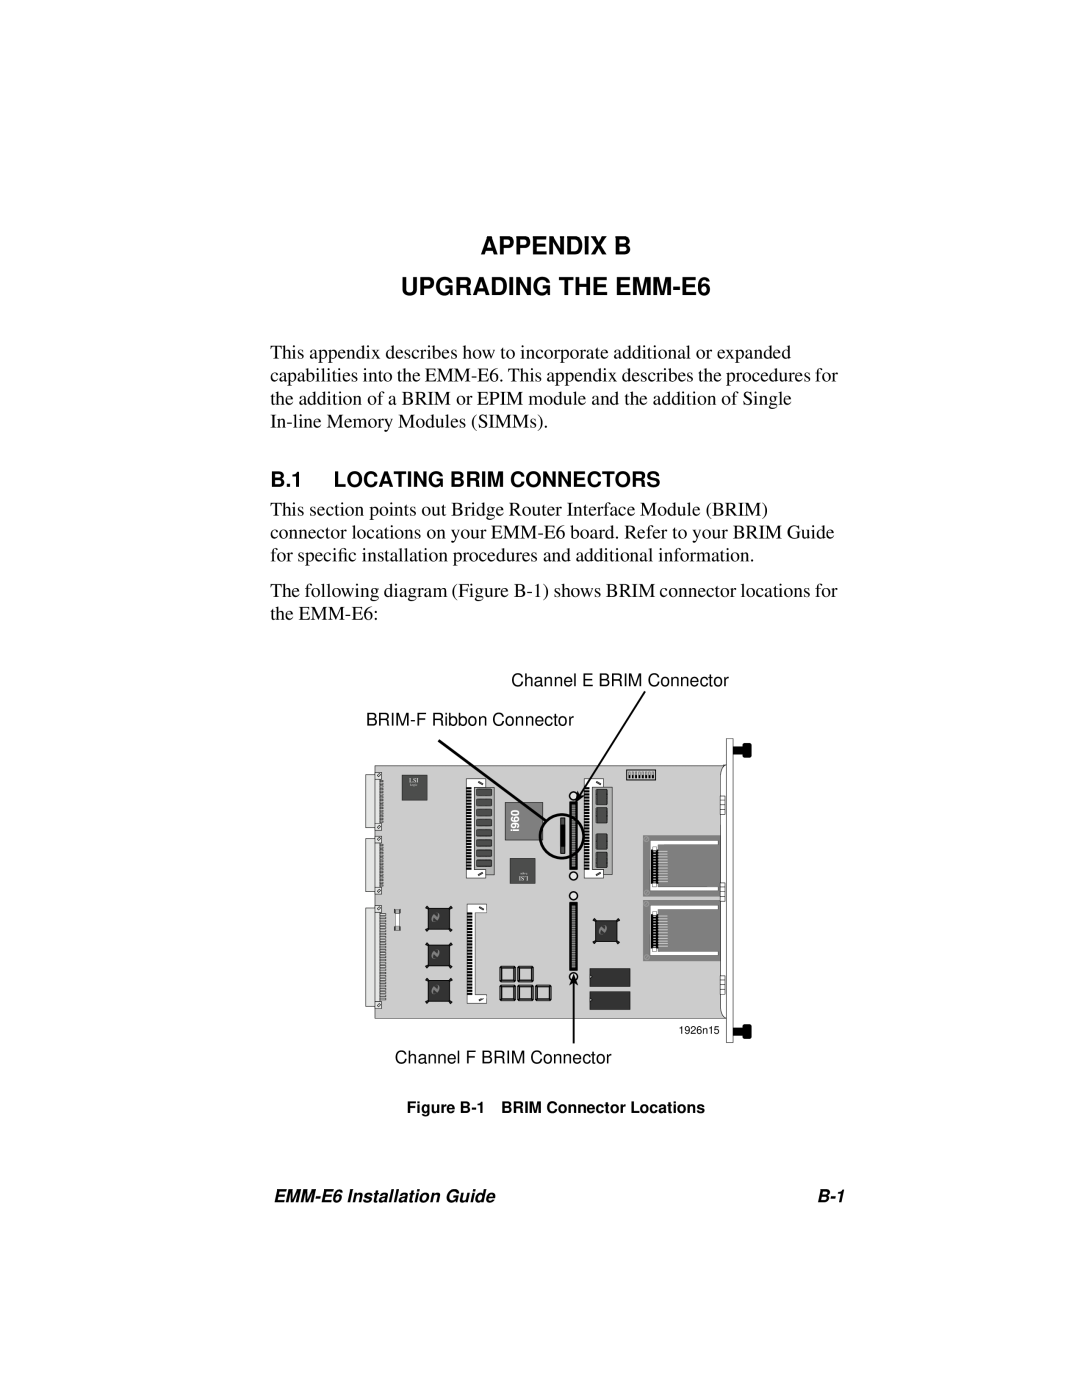 Cabletron Systems manual APPENDIX B UPGRADING THE EMM-E6, B.1 LOCATING BRIM CONNECTORS 